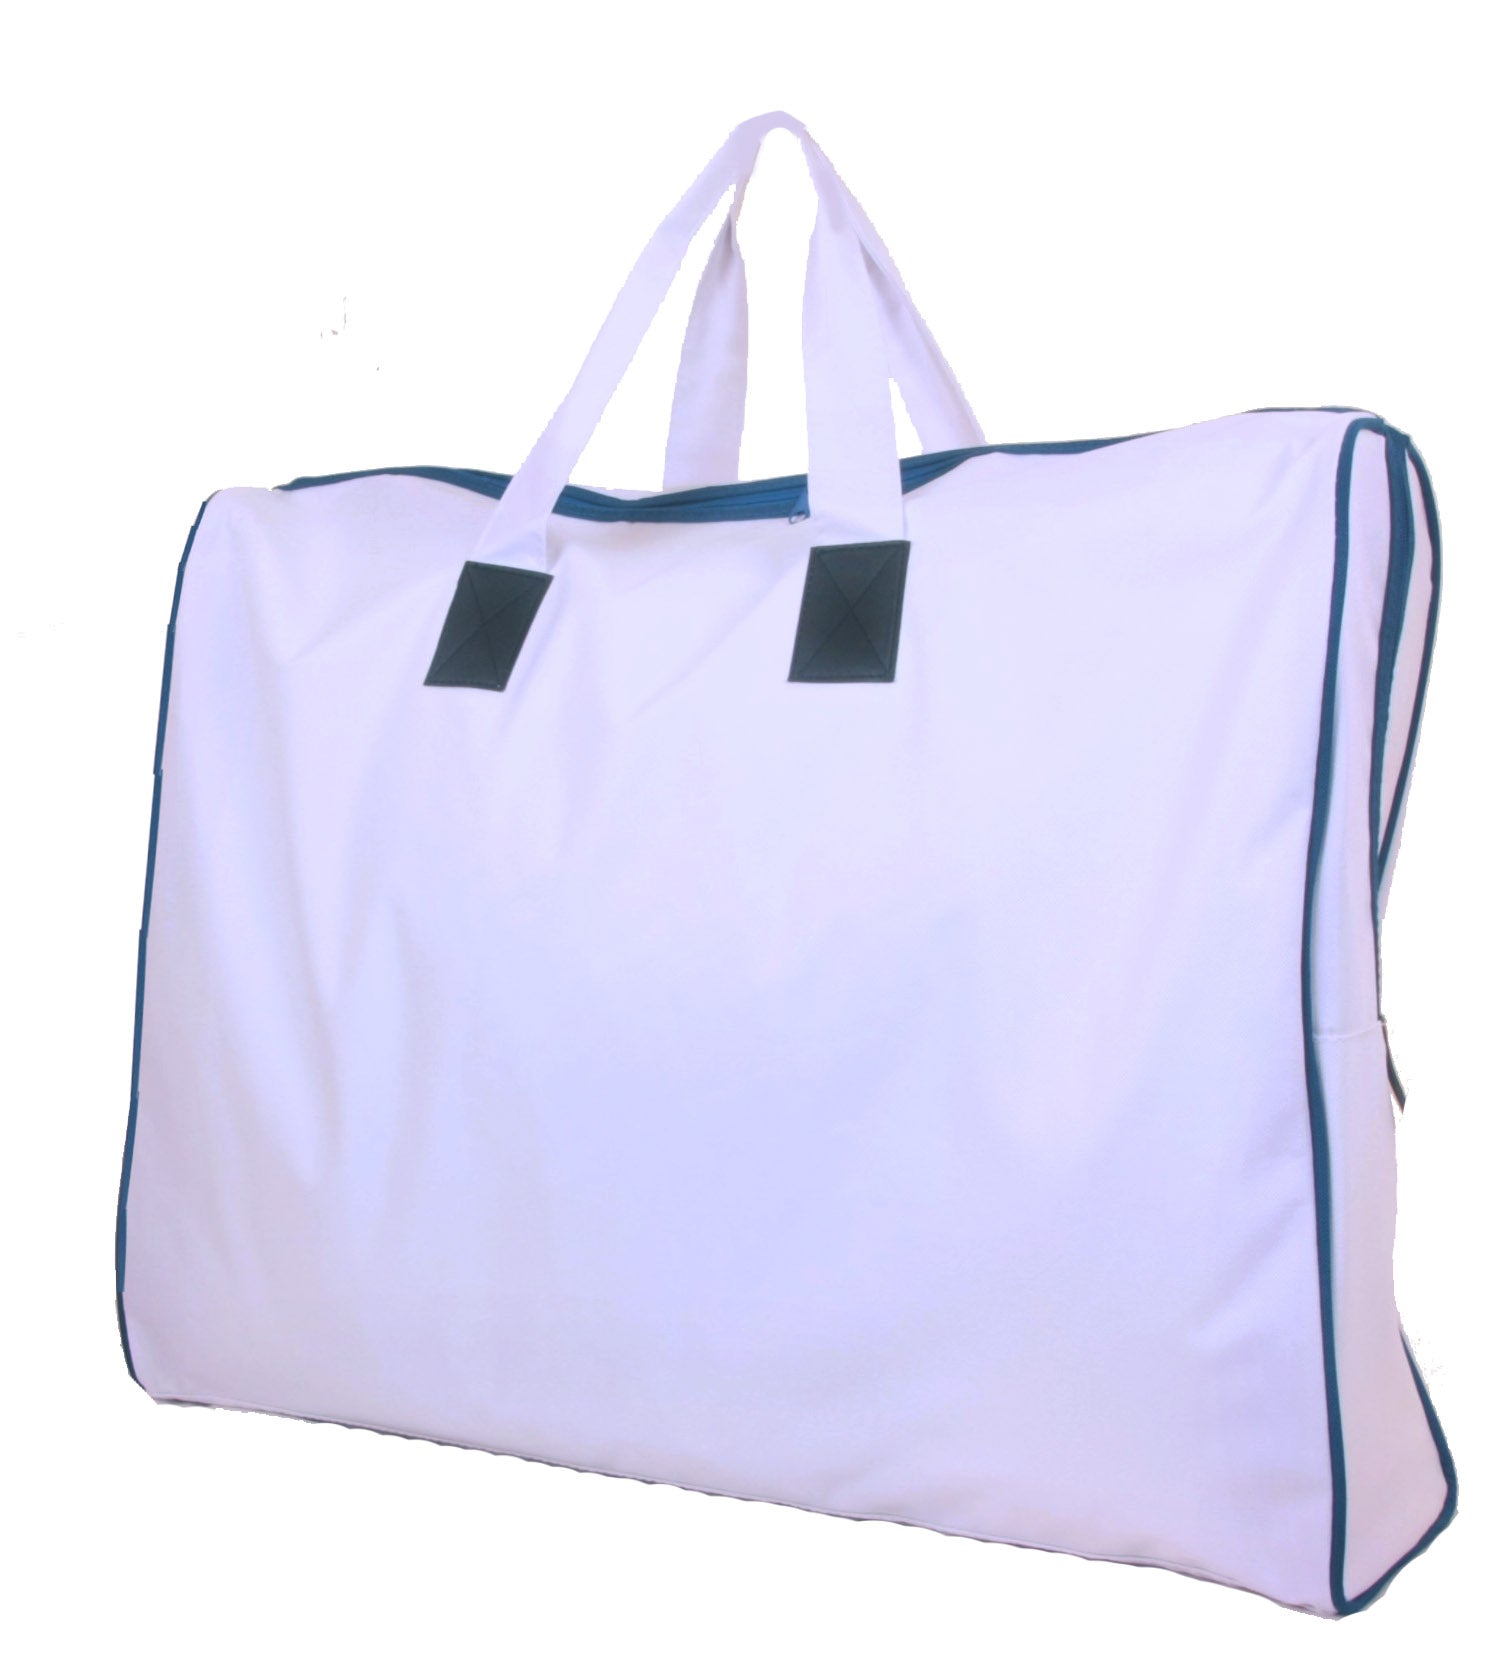 JLSB-0097 Sewn Bag